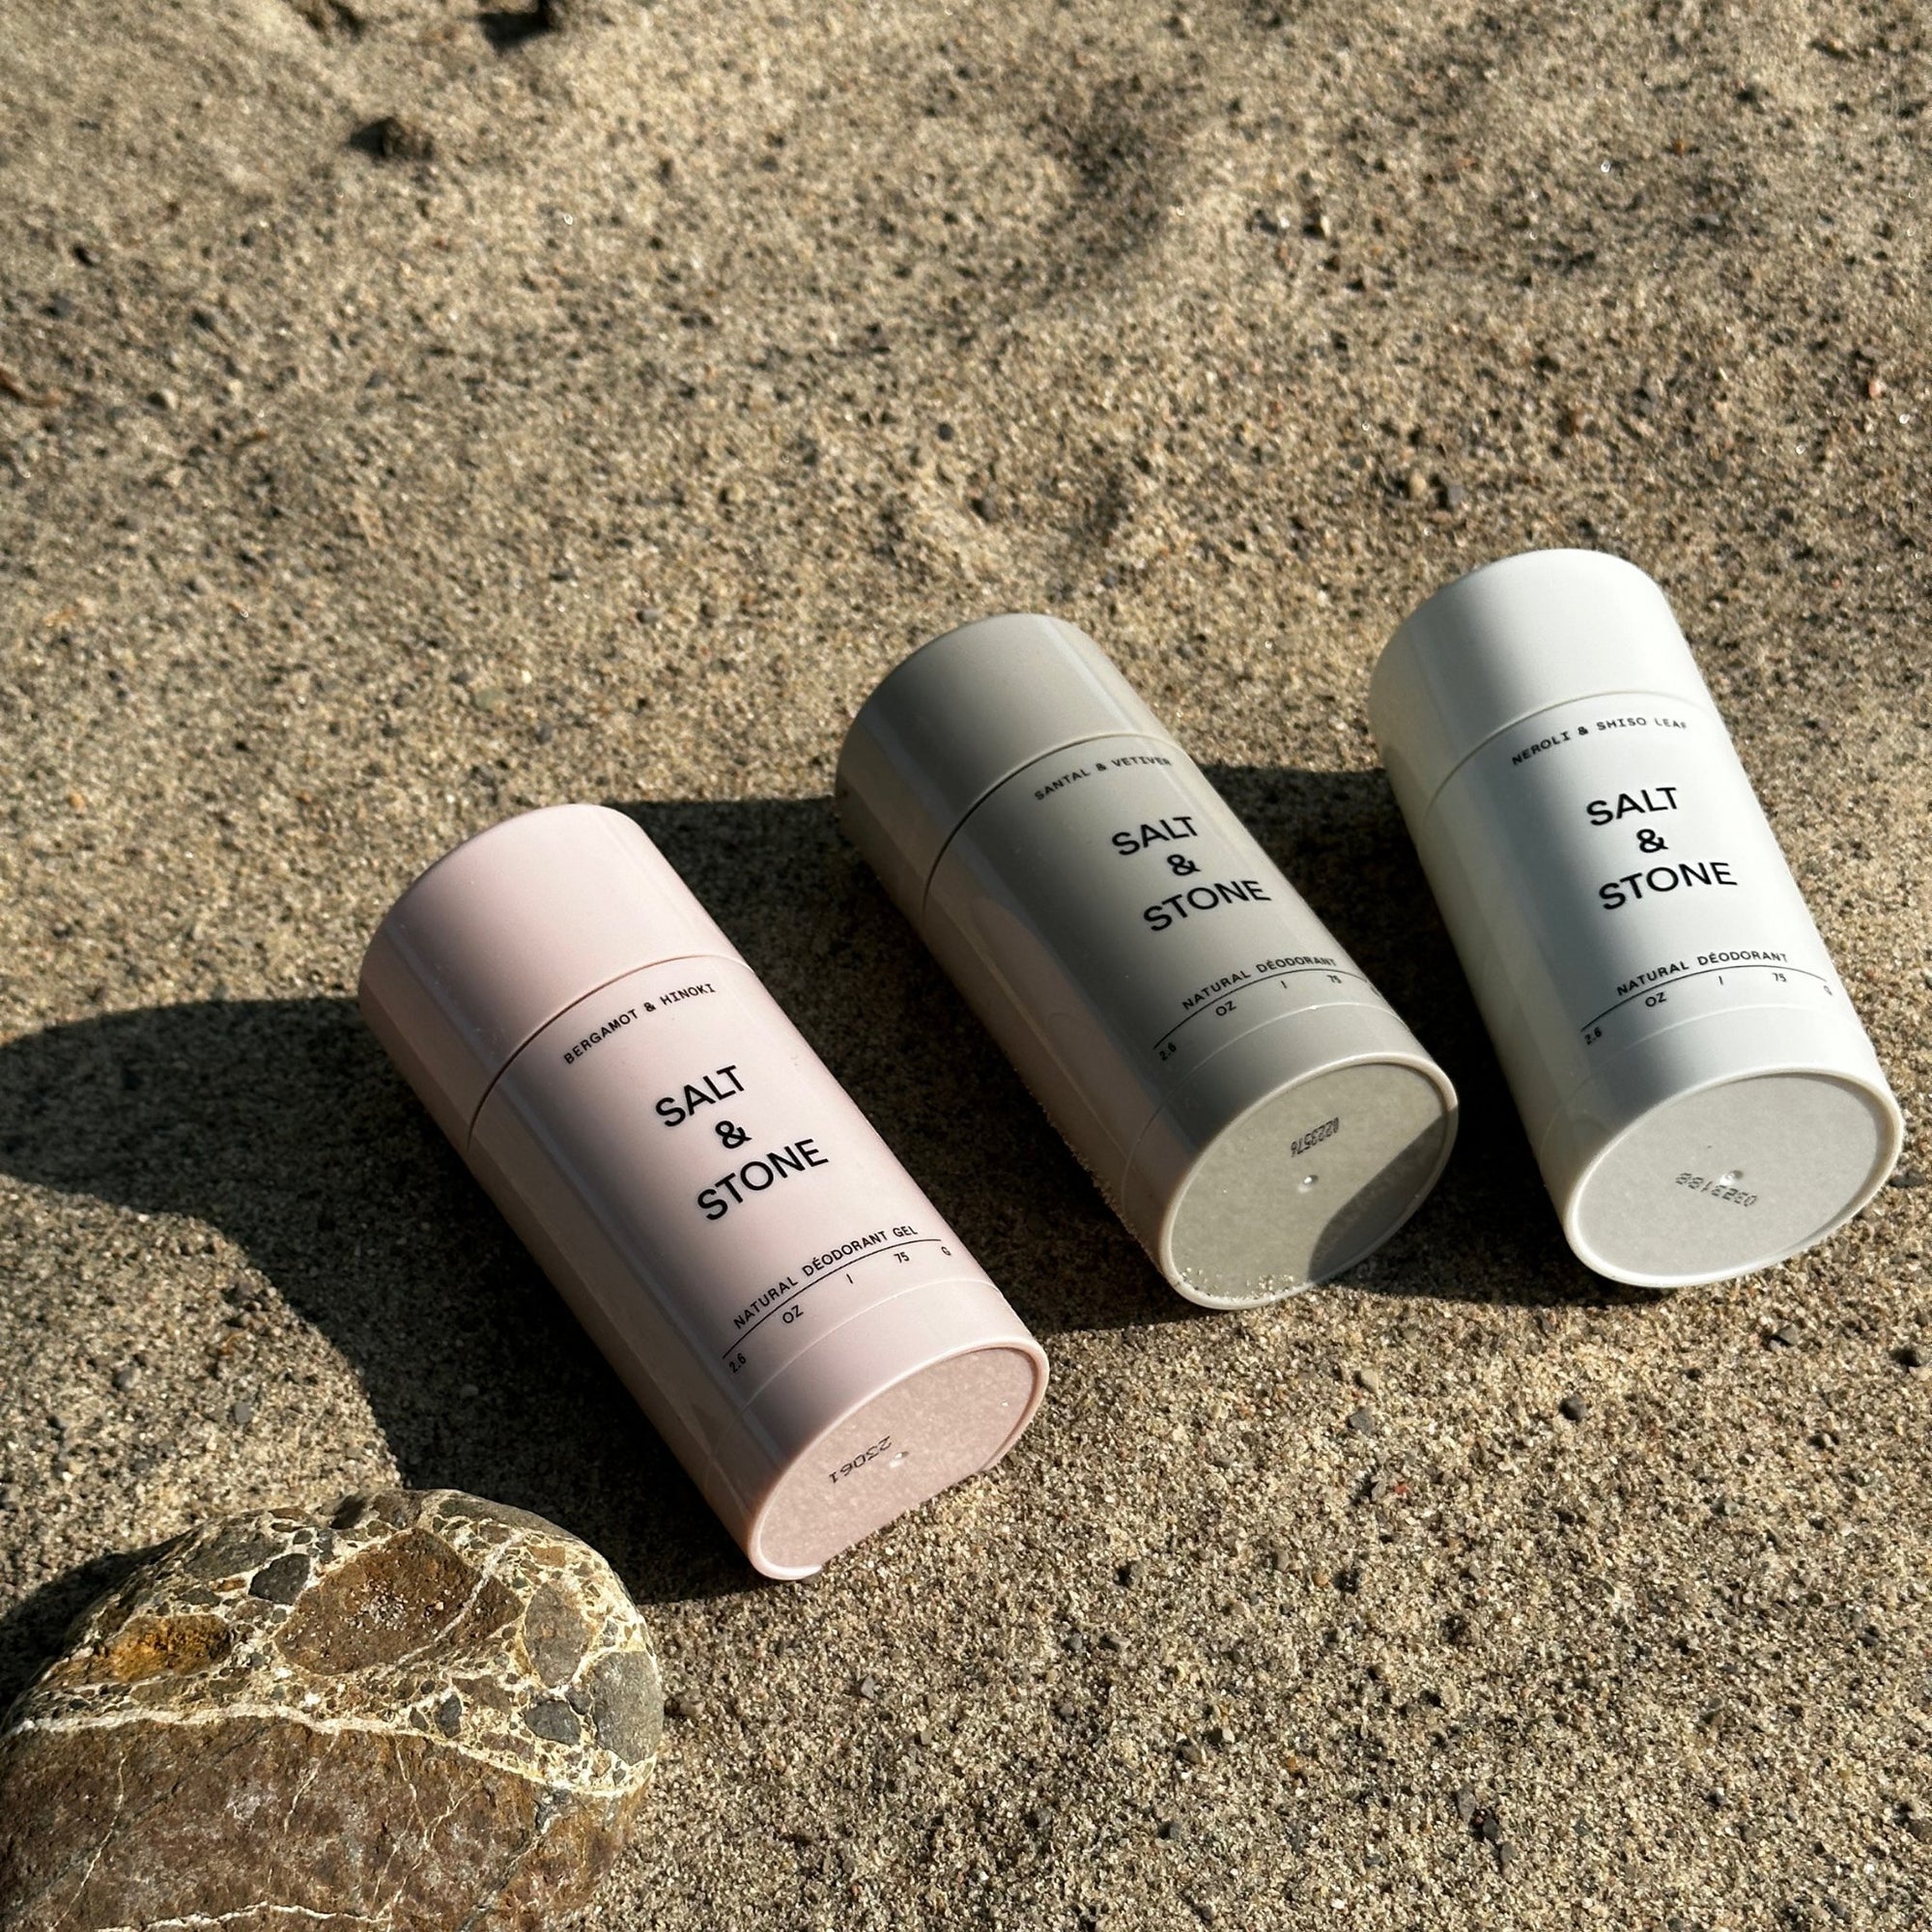 Salt & Stone - Salt & Stone Natural Deodorant Gel (Sensitive) - ORESTA clean beauty simplified